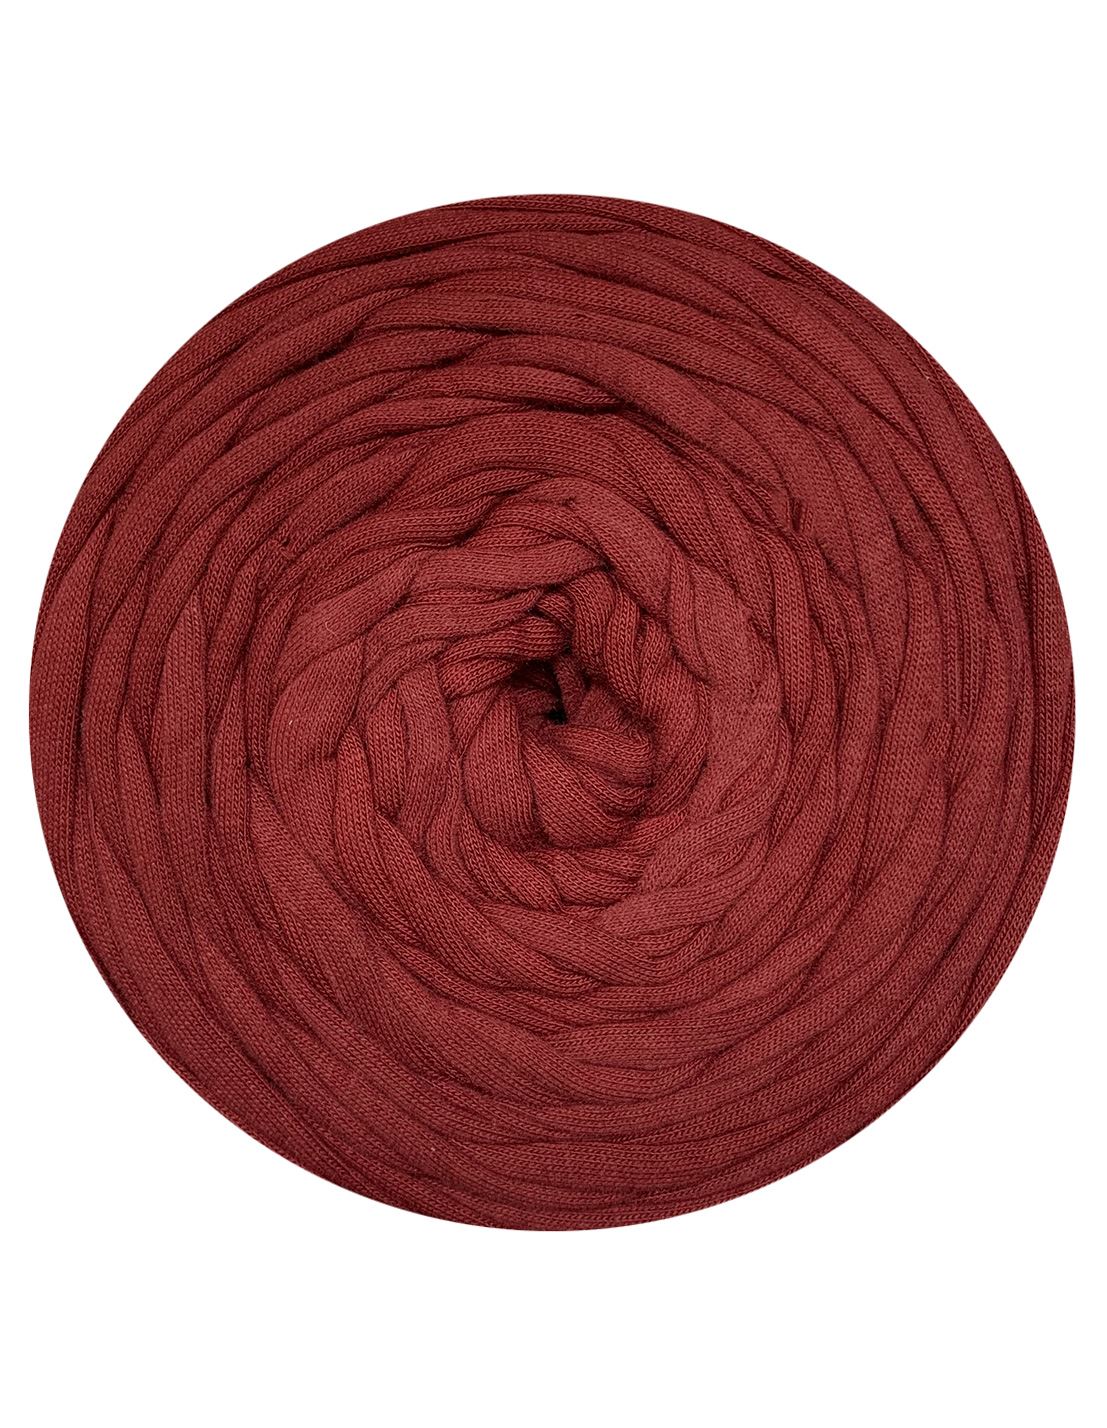 Muted wine red t-shirt yarn (100-120m)